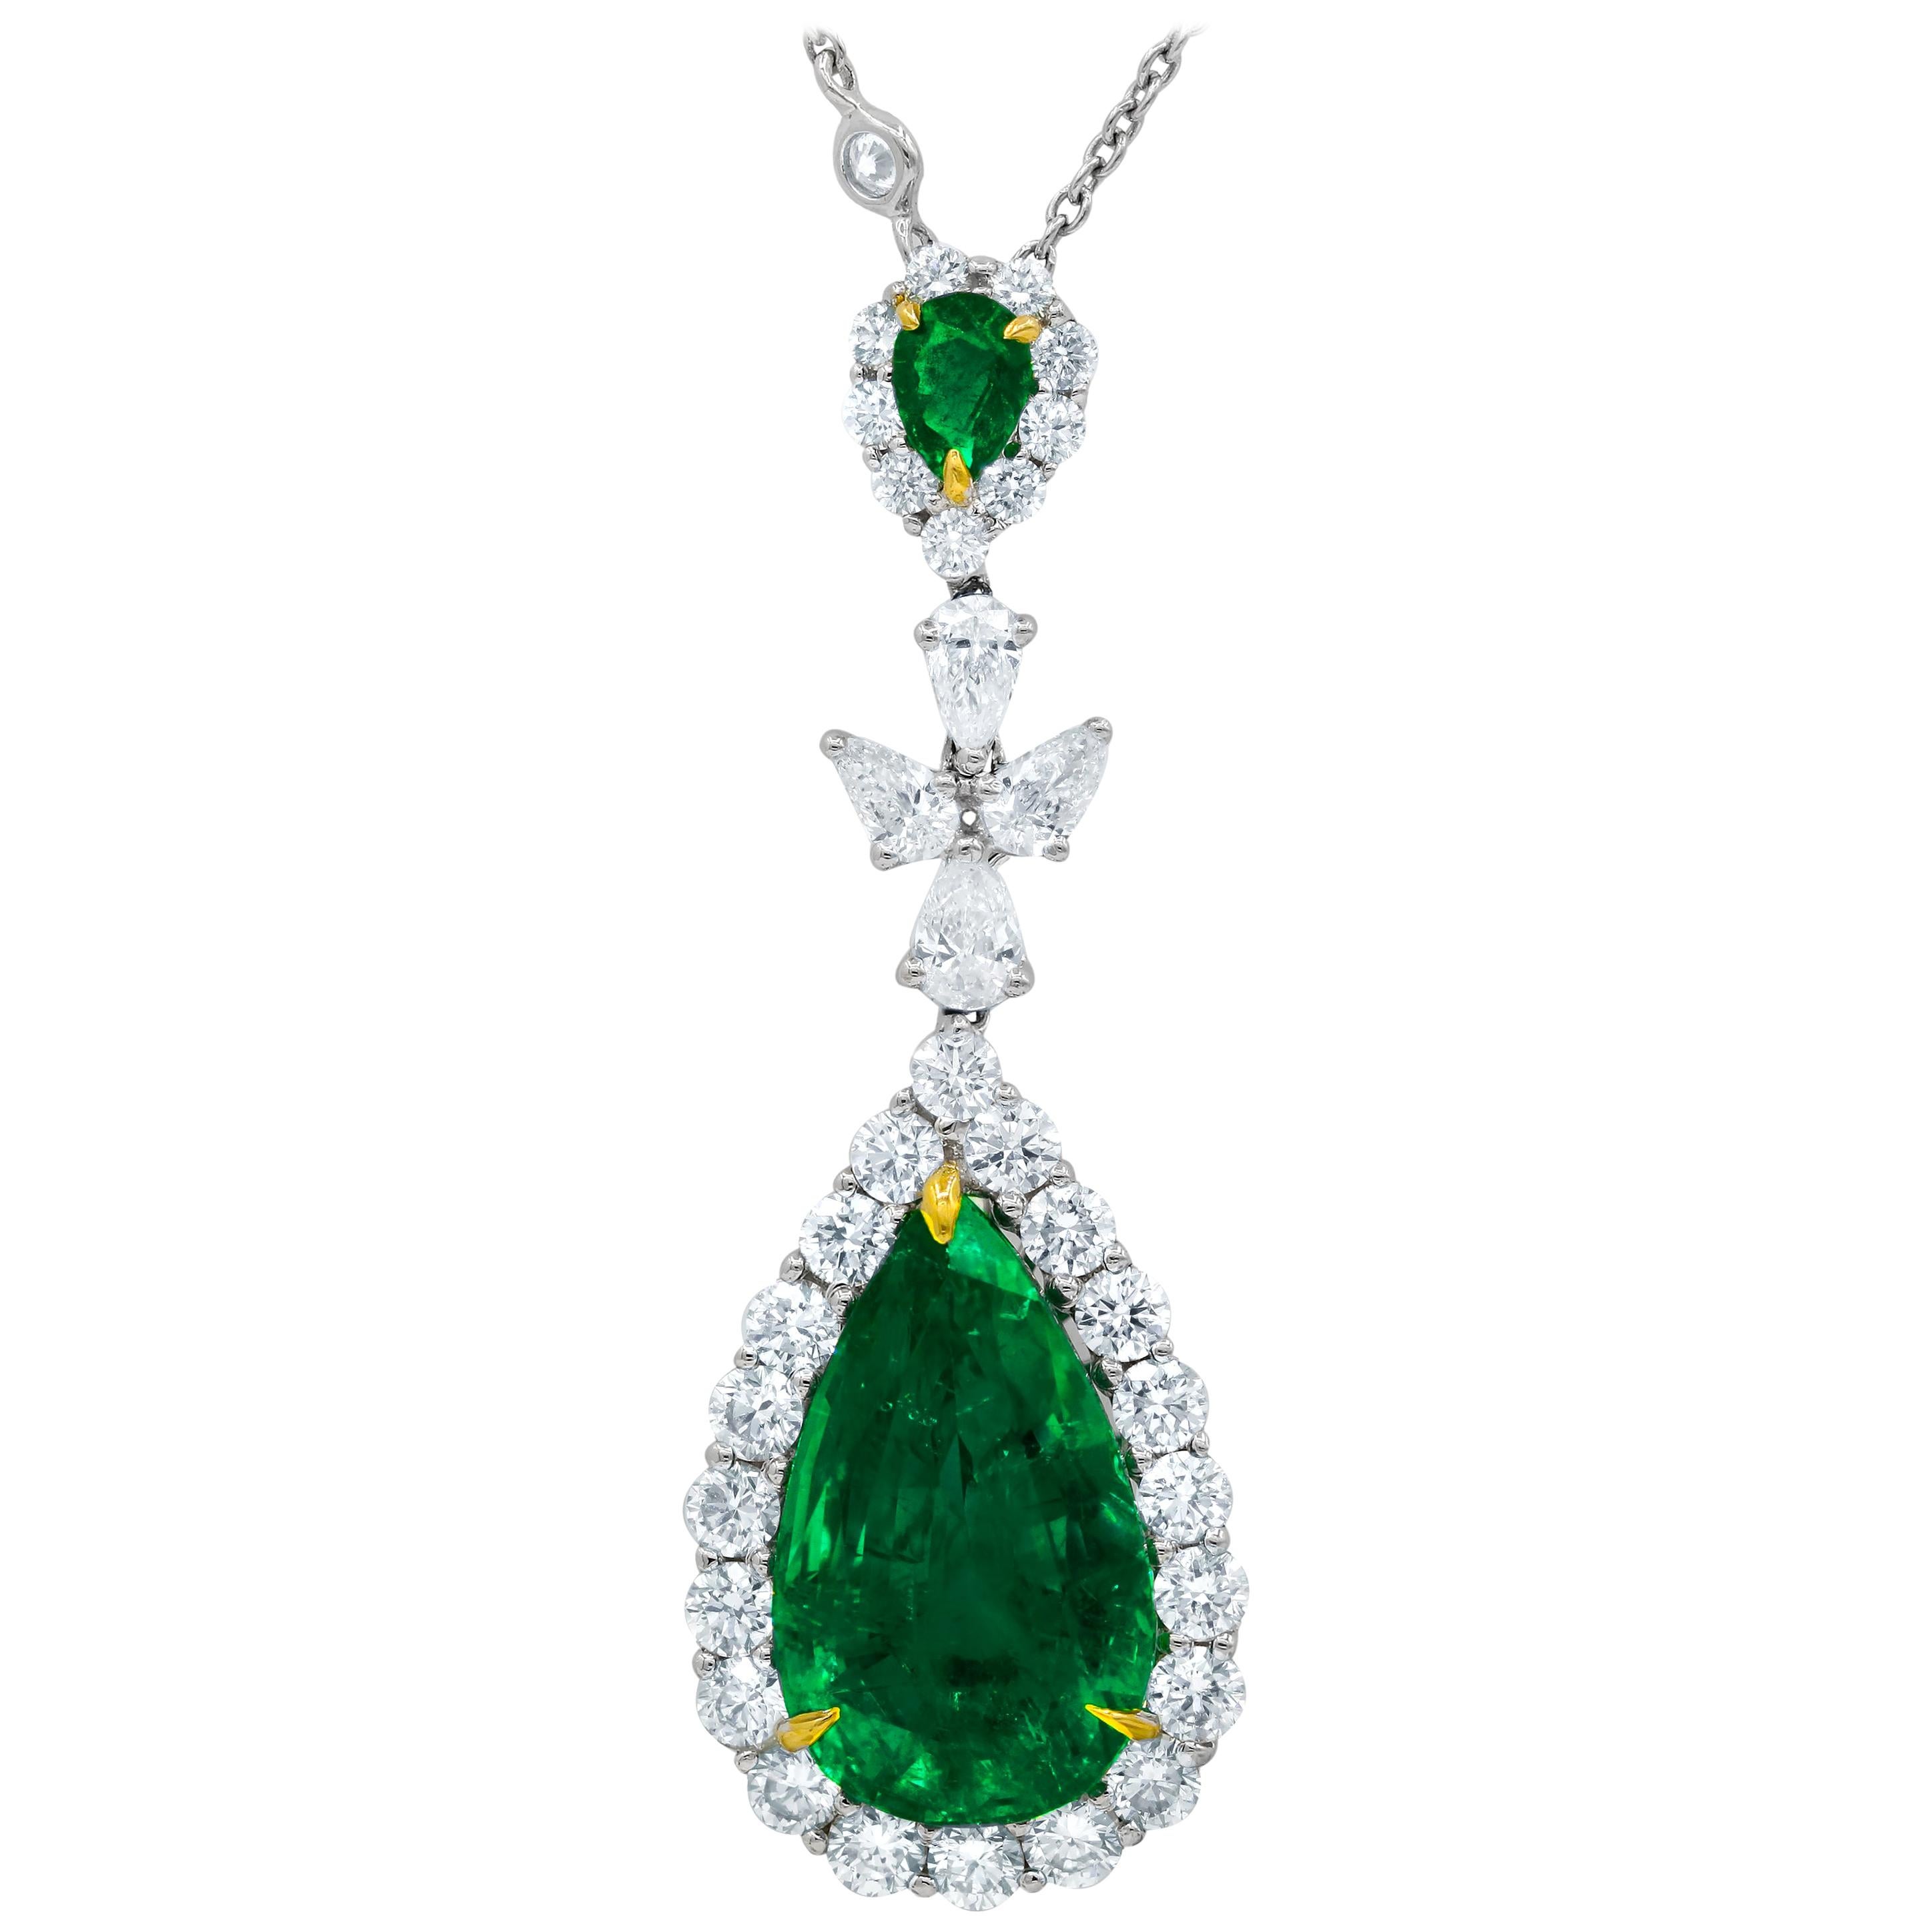 Diana M. Certified 8.58 Carat Green Emerald Pendant For Sale